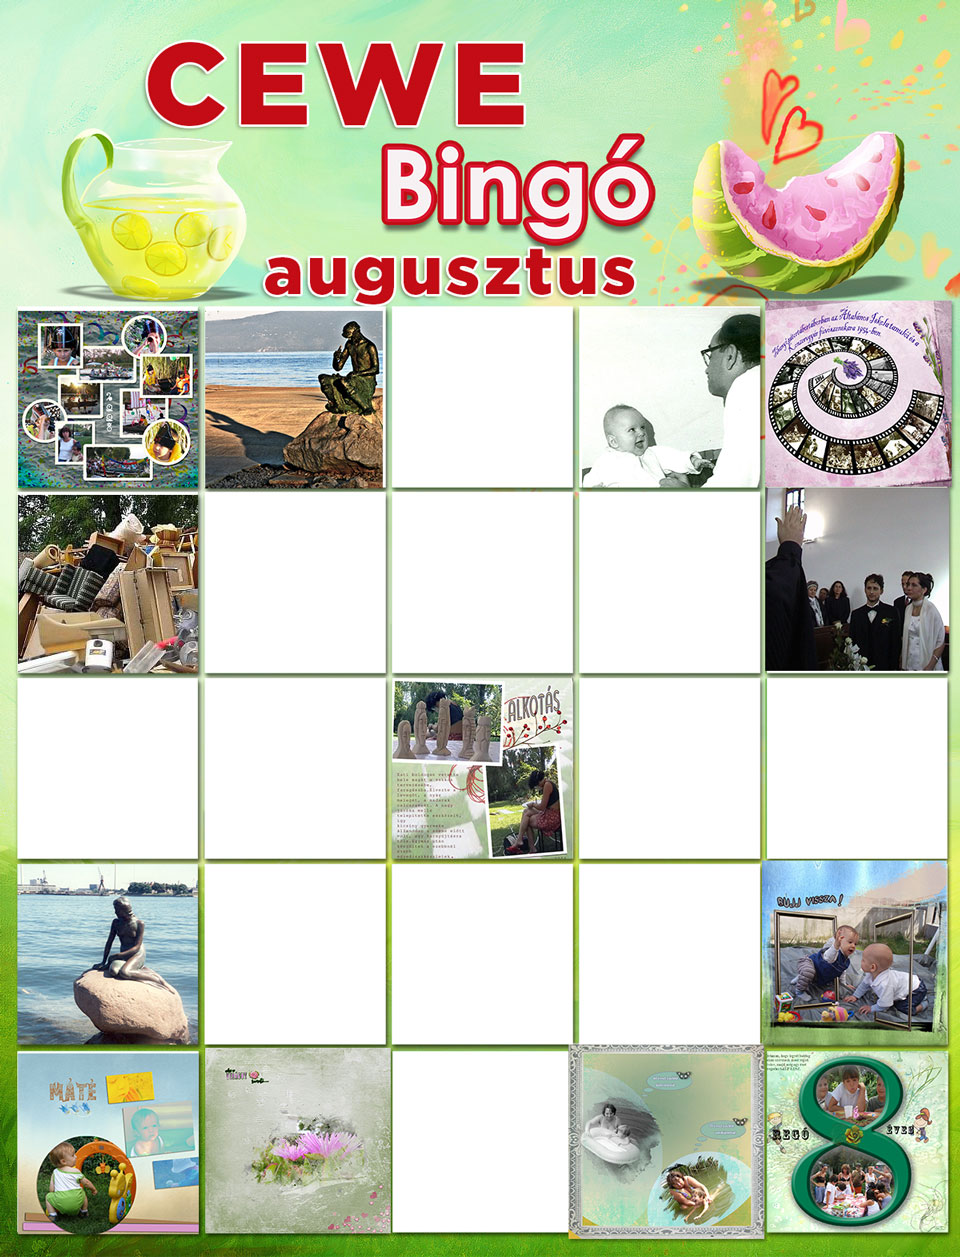 bingo-9 augusztus